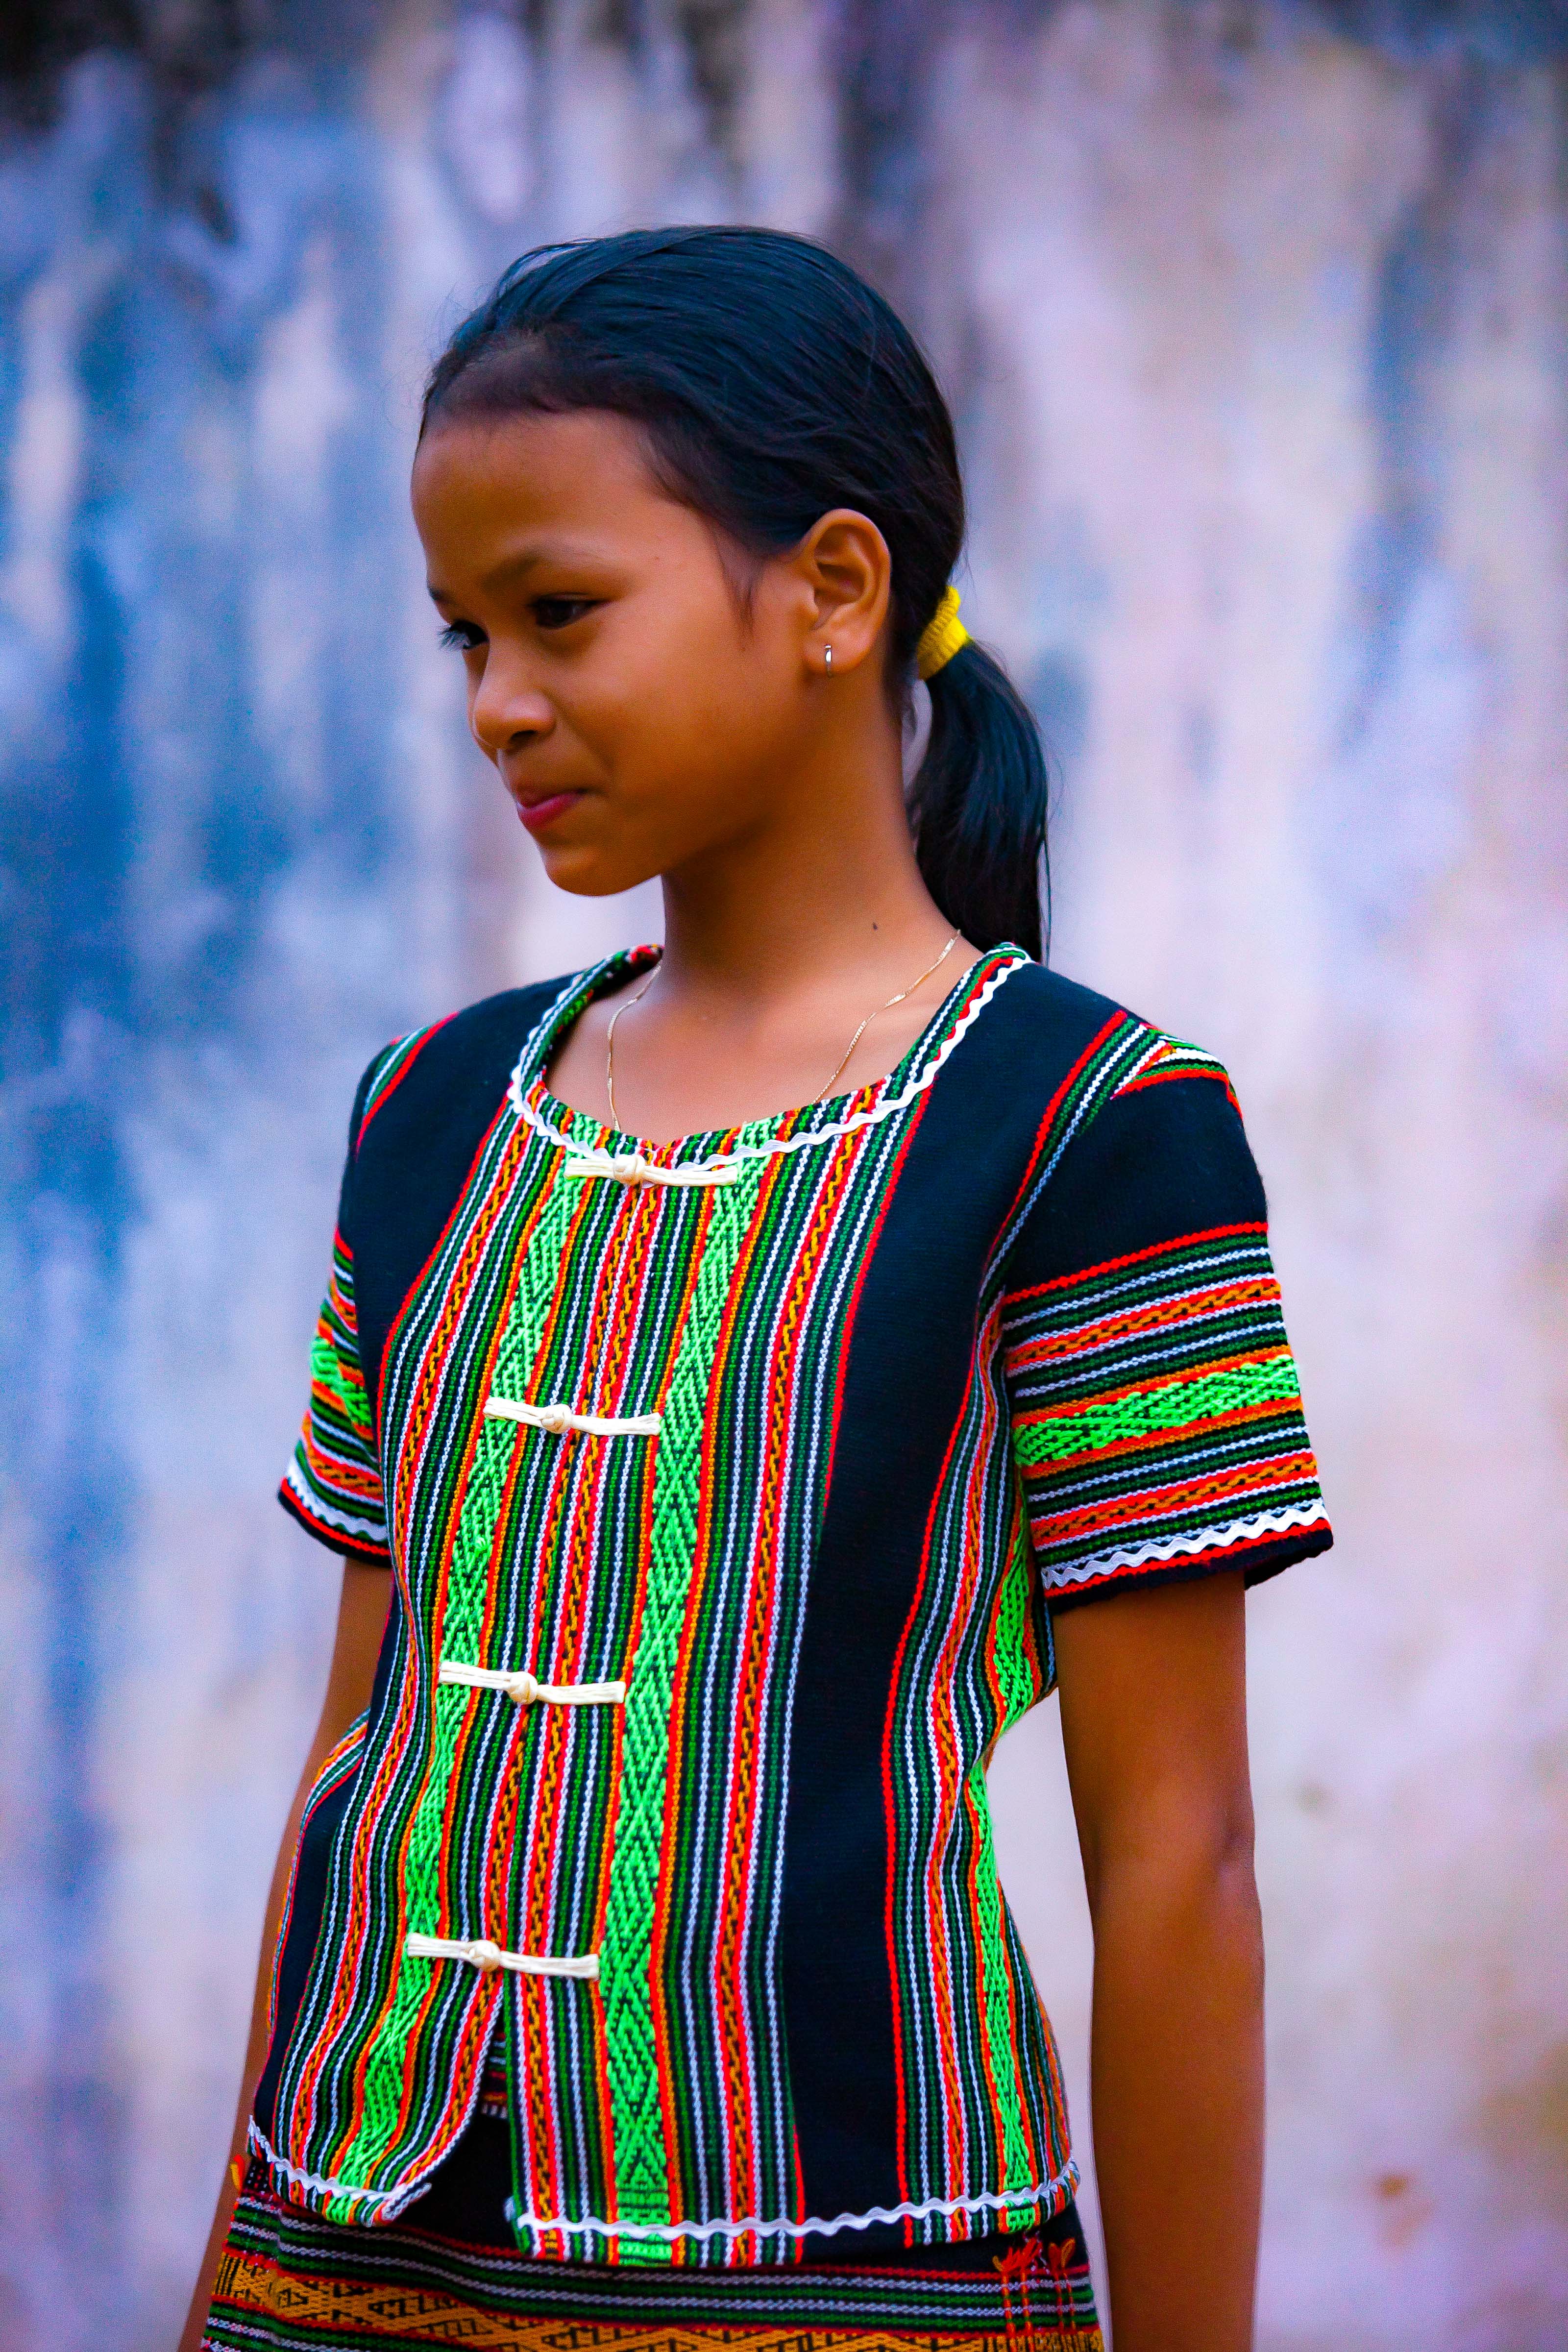 Vietnam, Binh Phuoc Prov, Girl,2010, IMG_0247